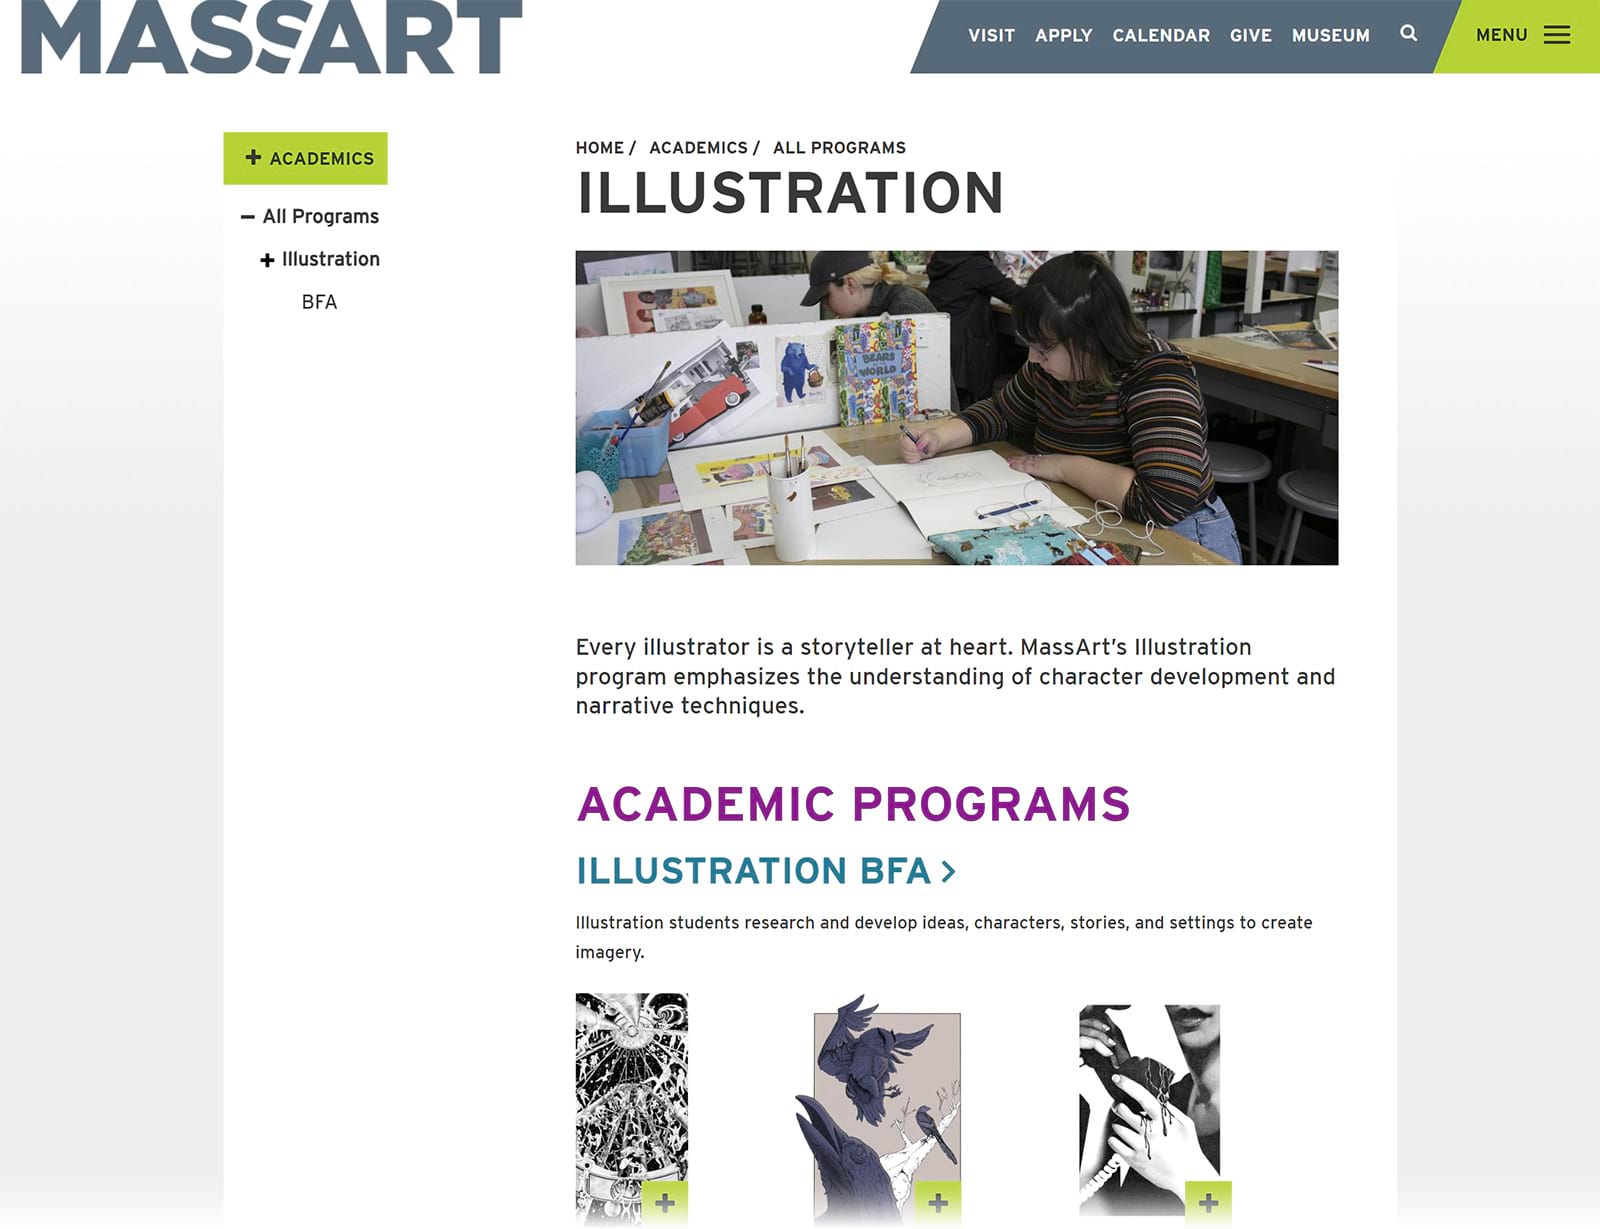 Massart Illustration programs page.